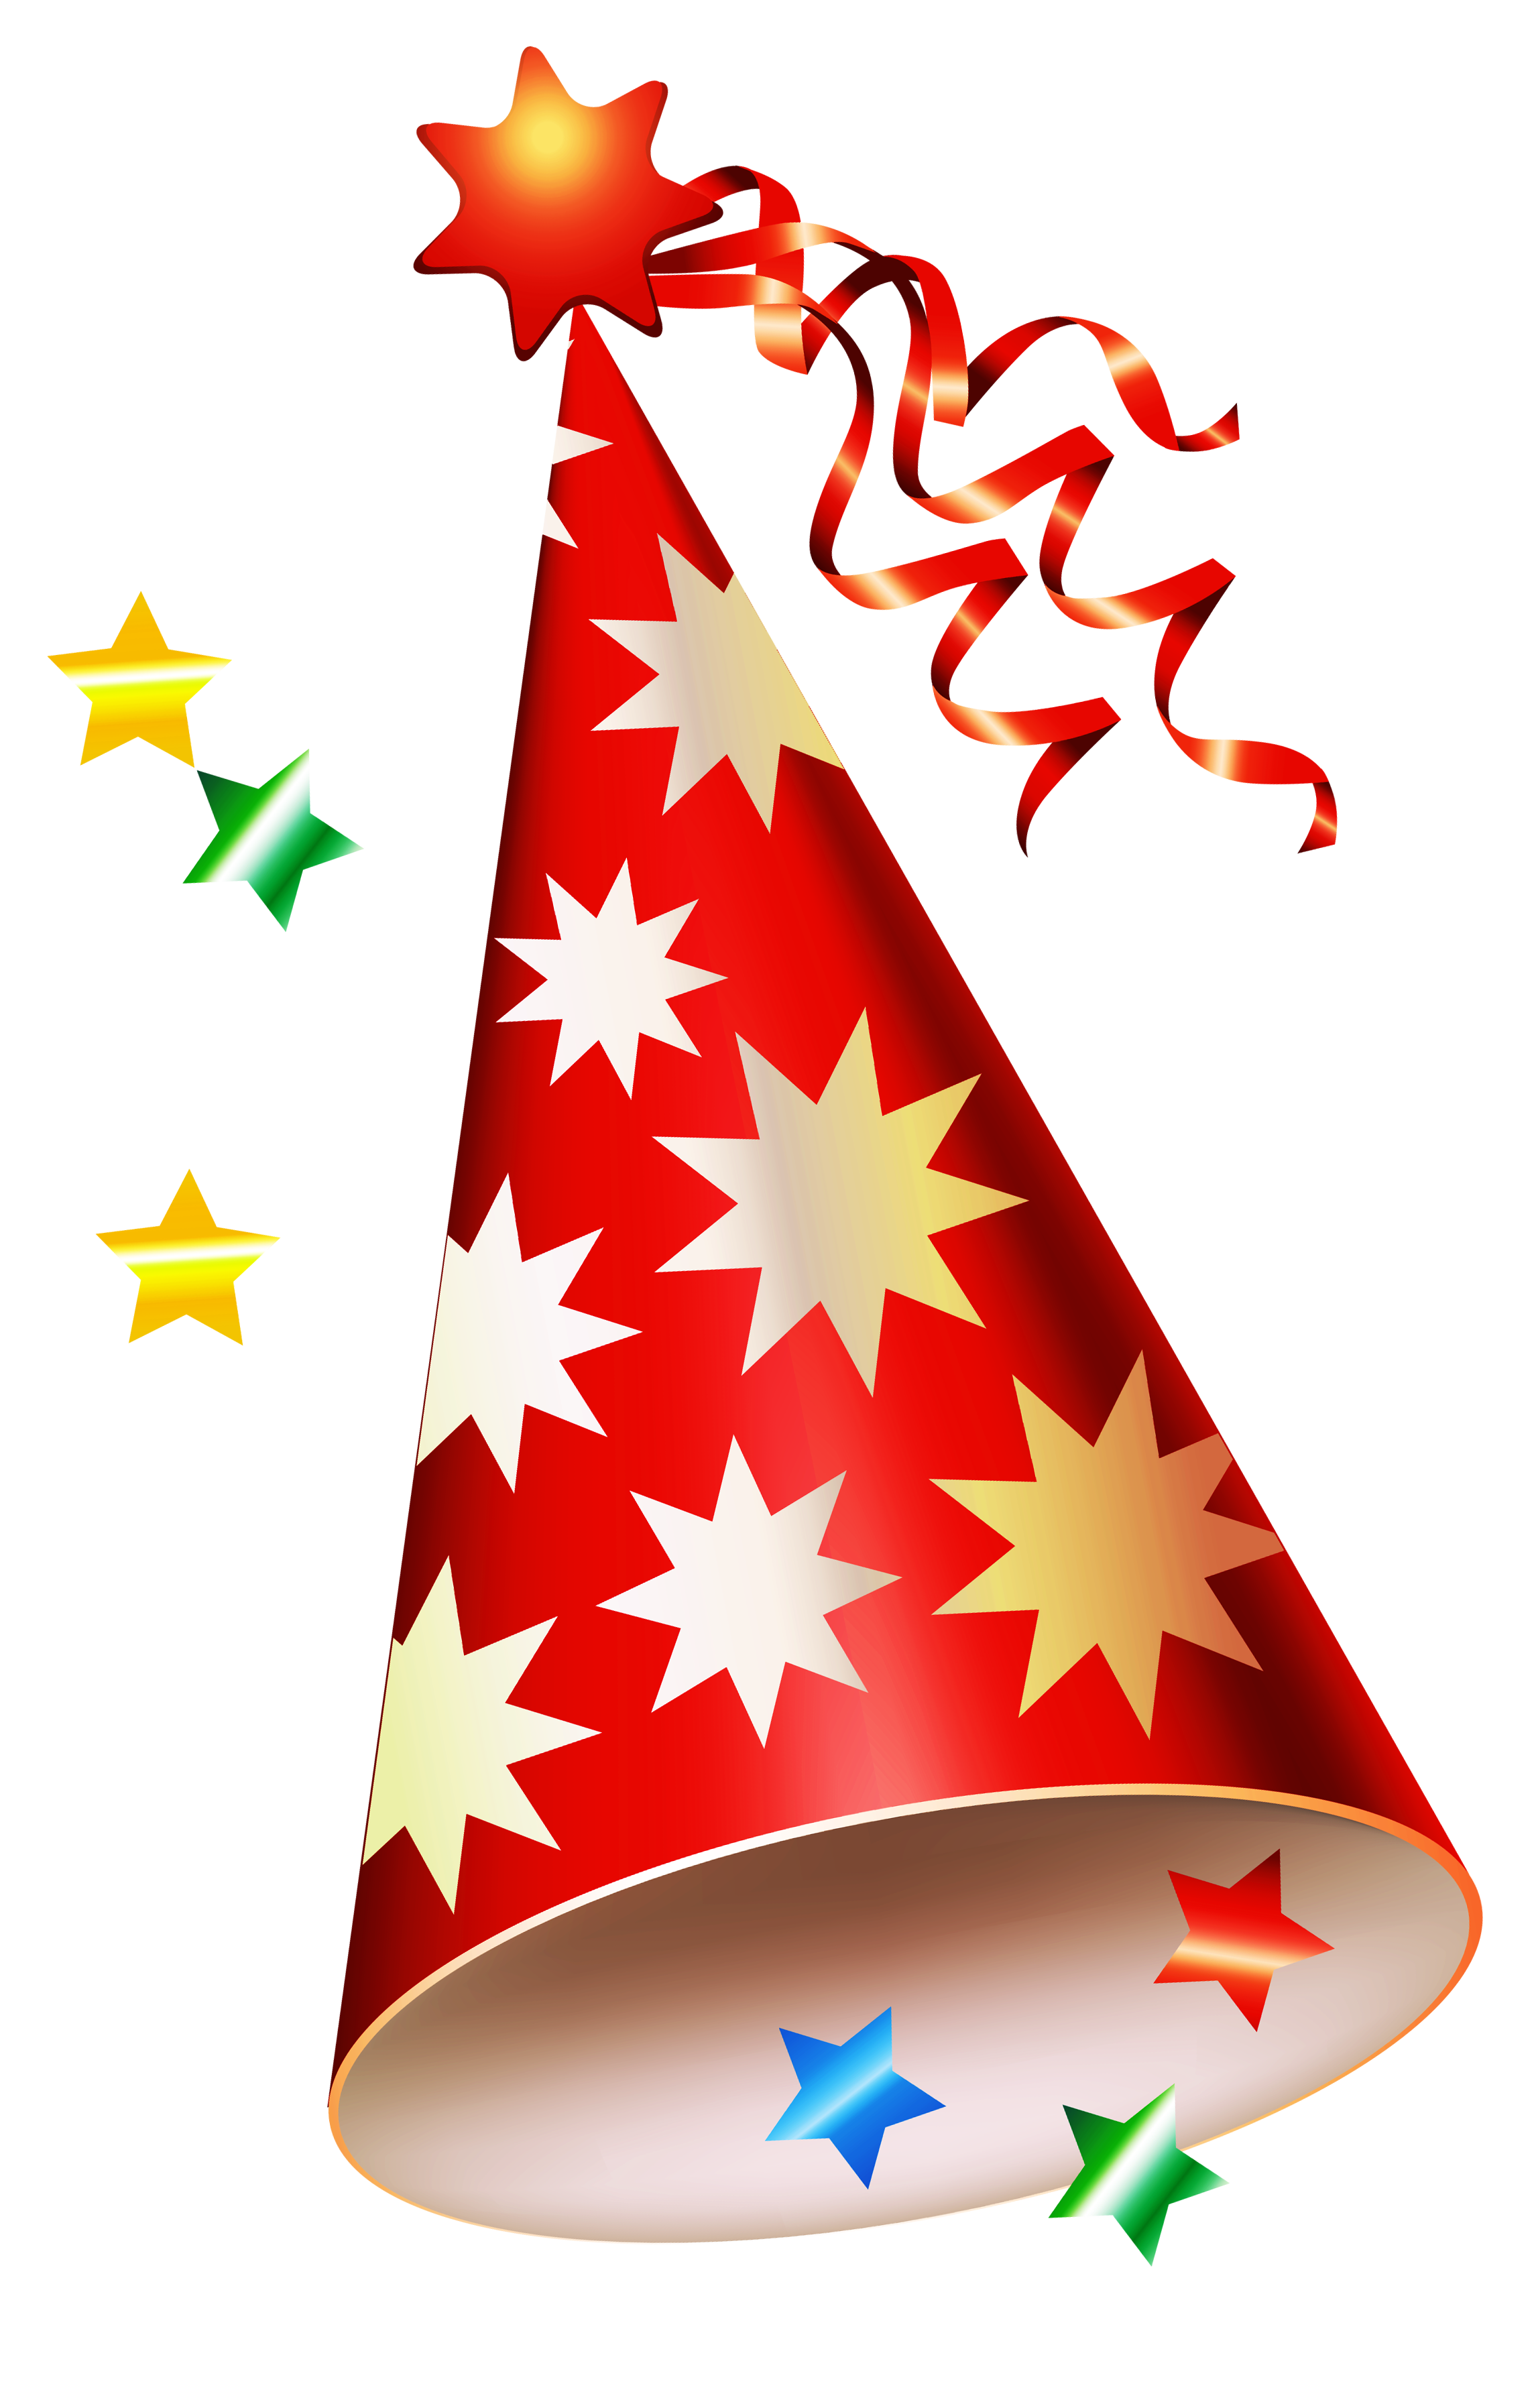 Birthday Party Hat clip art